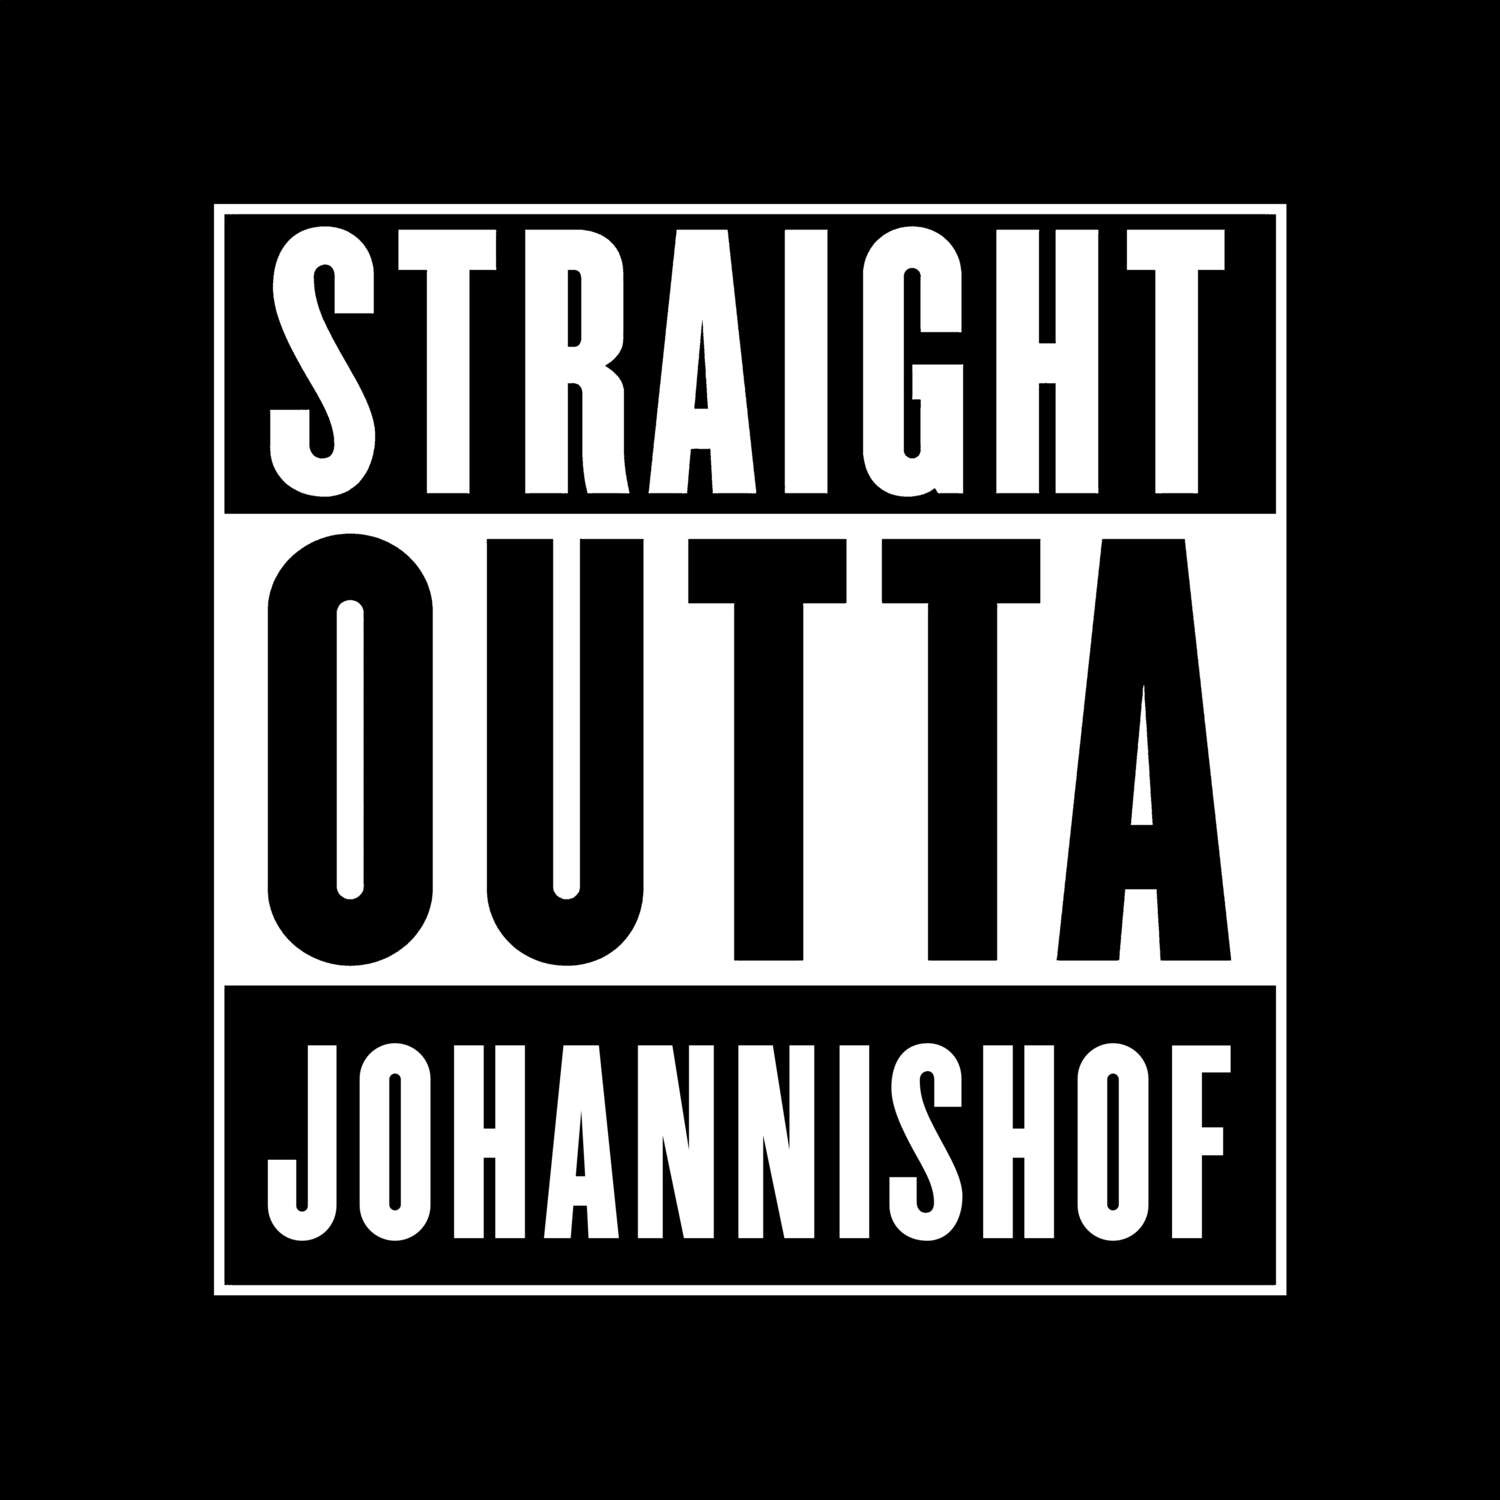 Johannishof T-Shirt »Straight Outta«